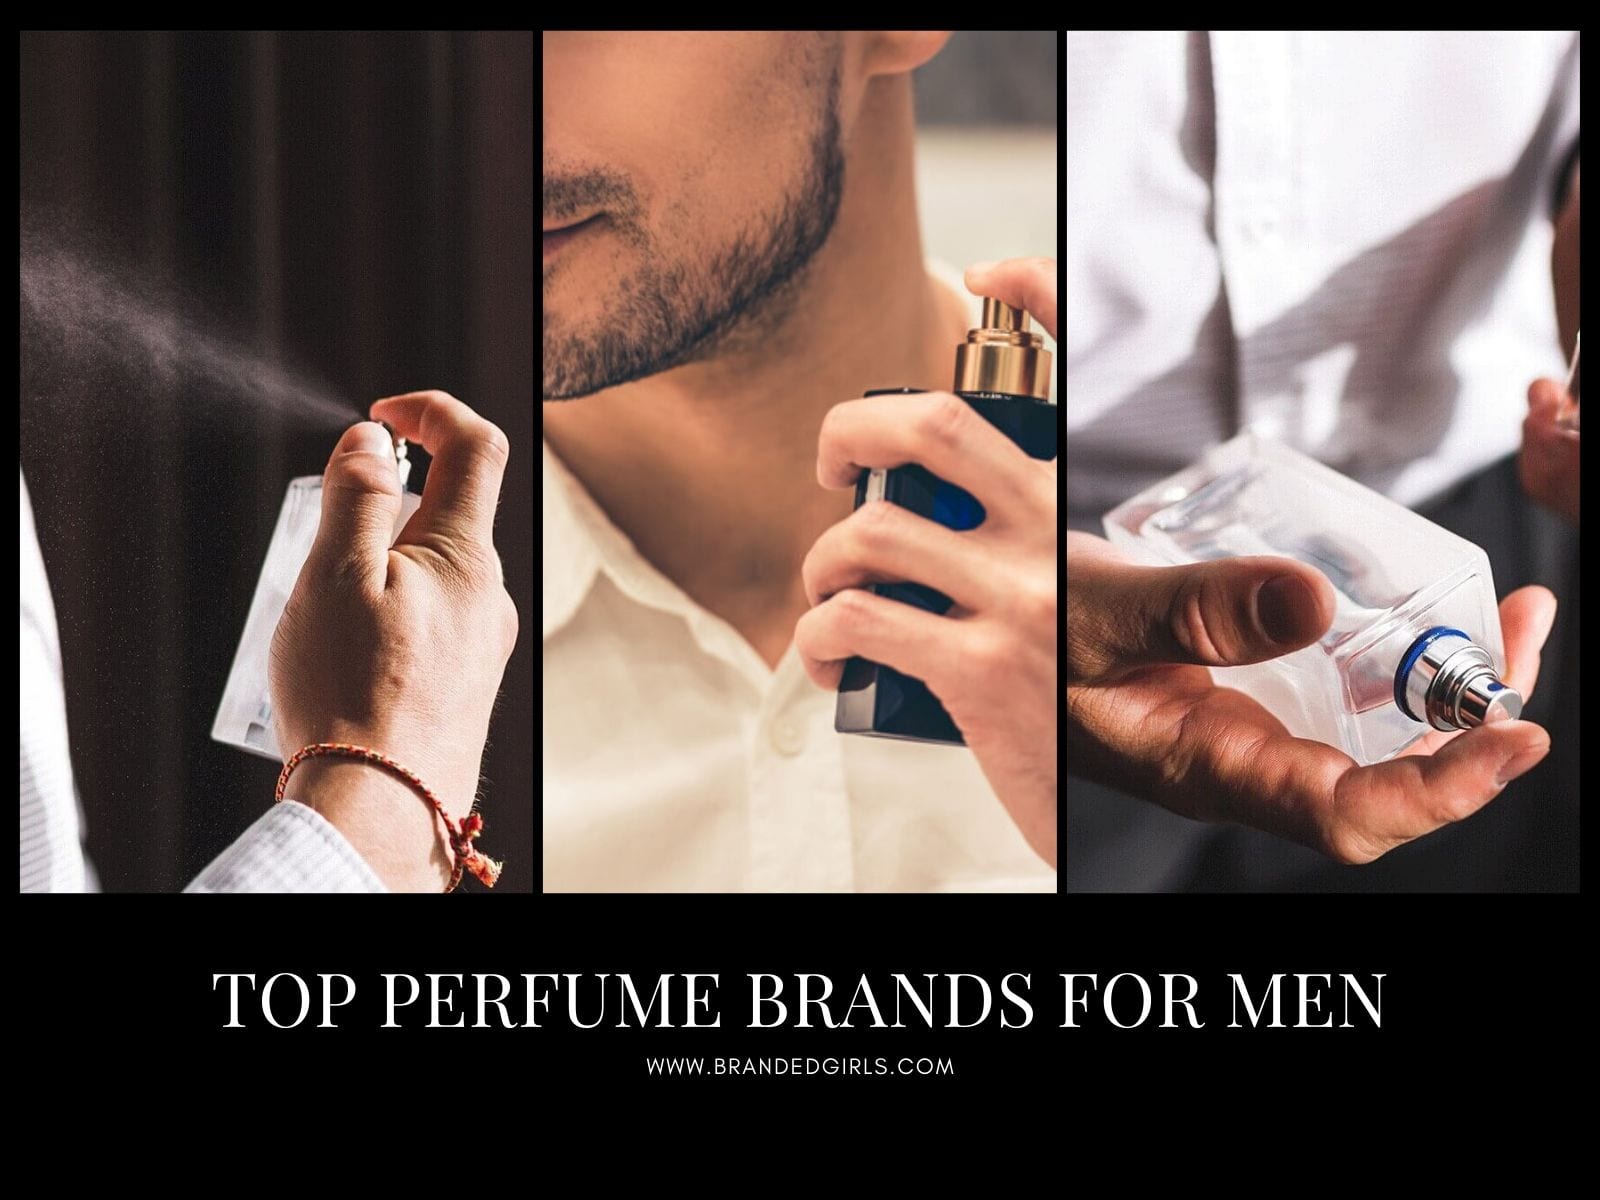 Top Perfume Brands for Men